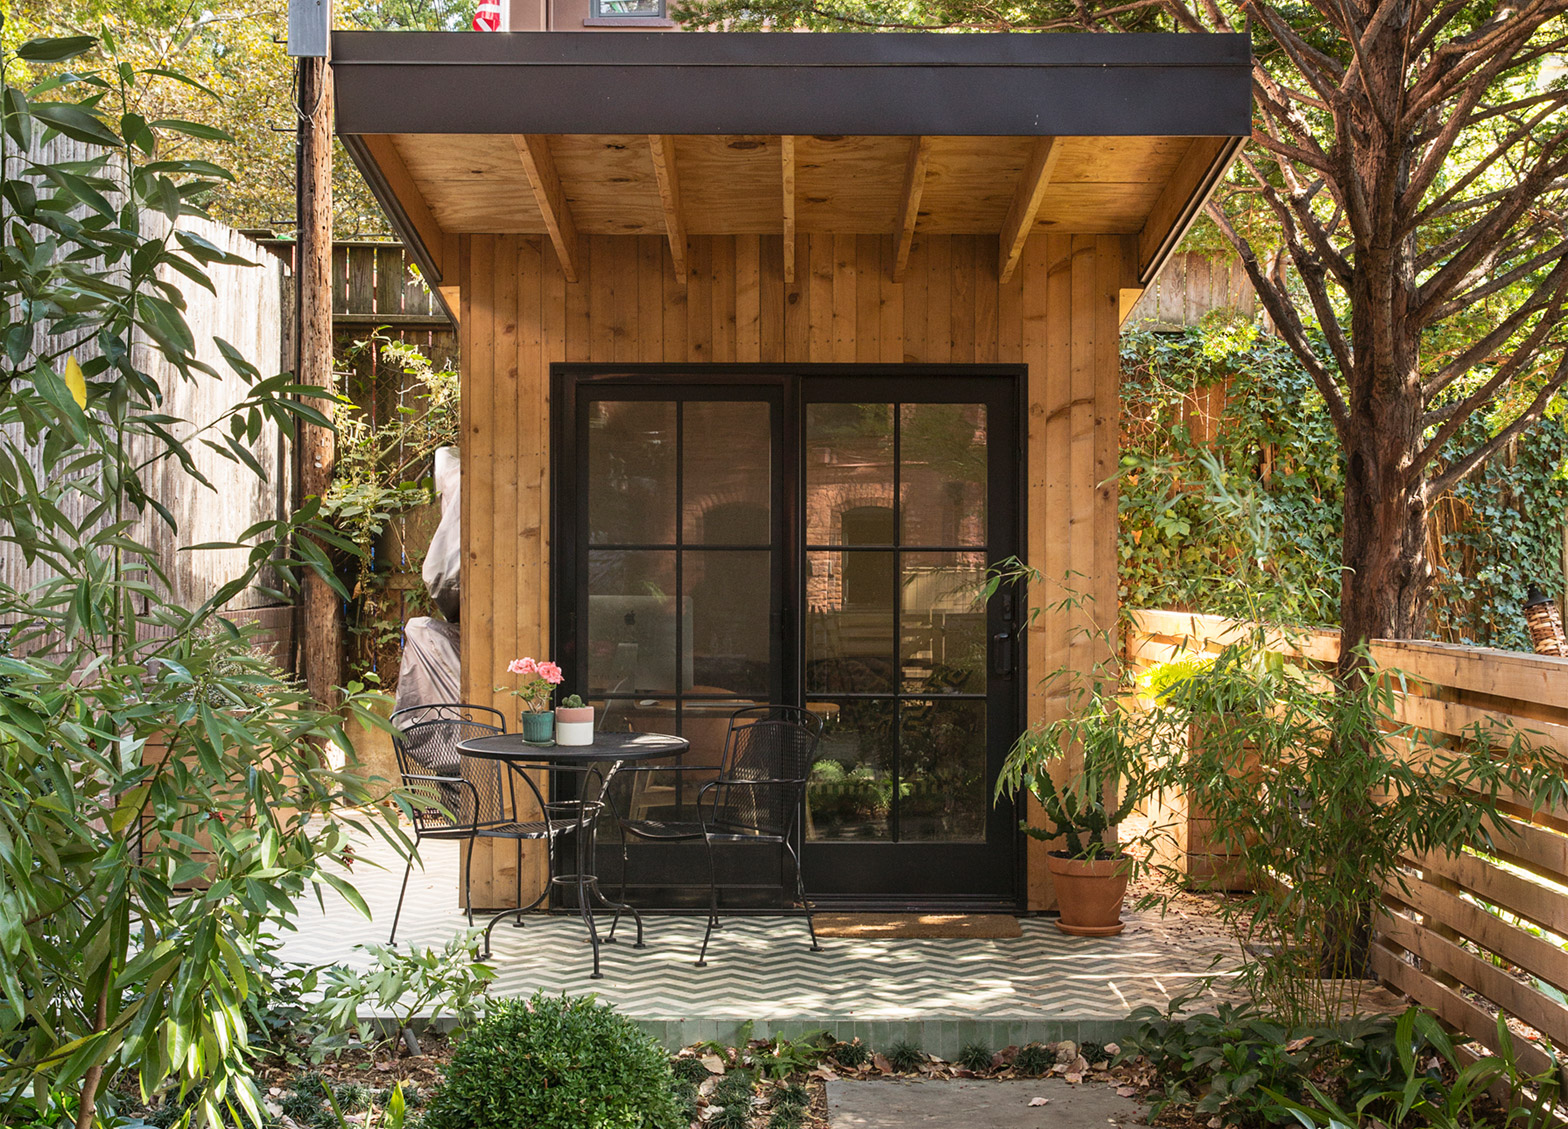 Dream Of Working From Your Backyard Fuels Brooklyn Garden Studio Trend